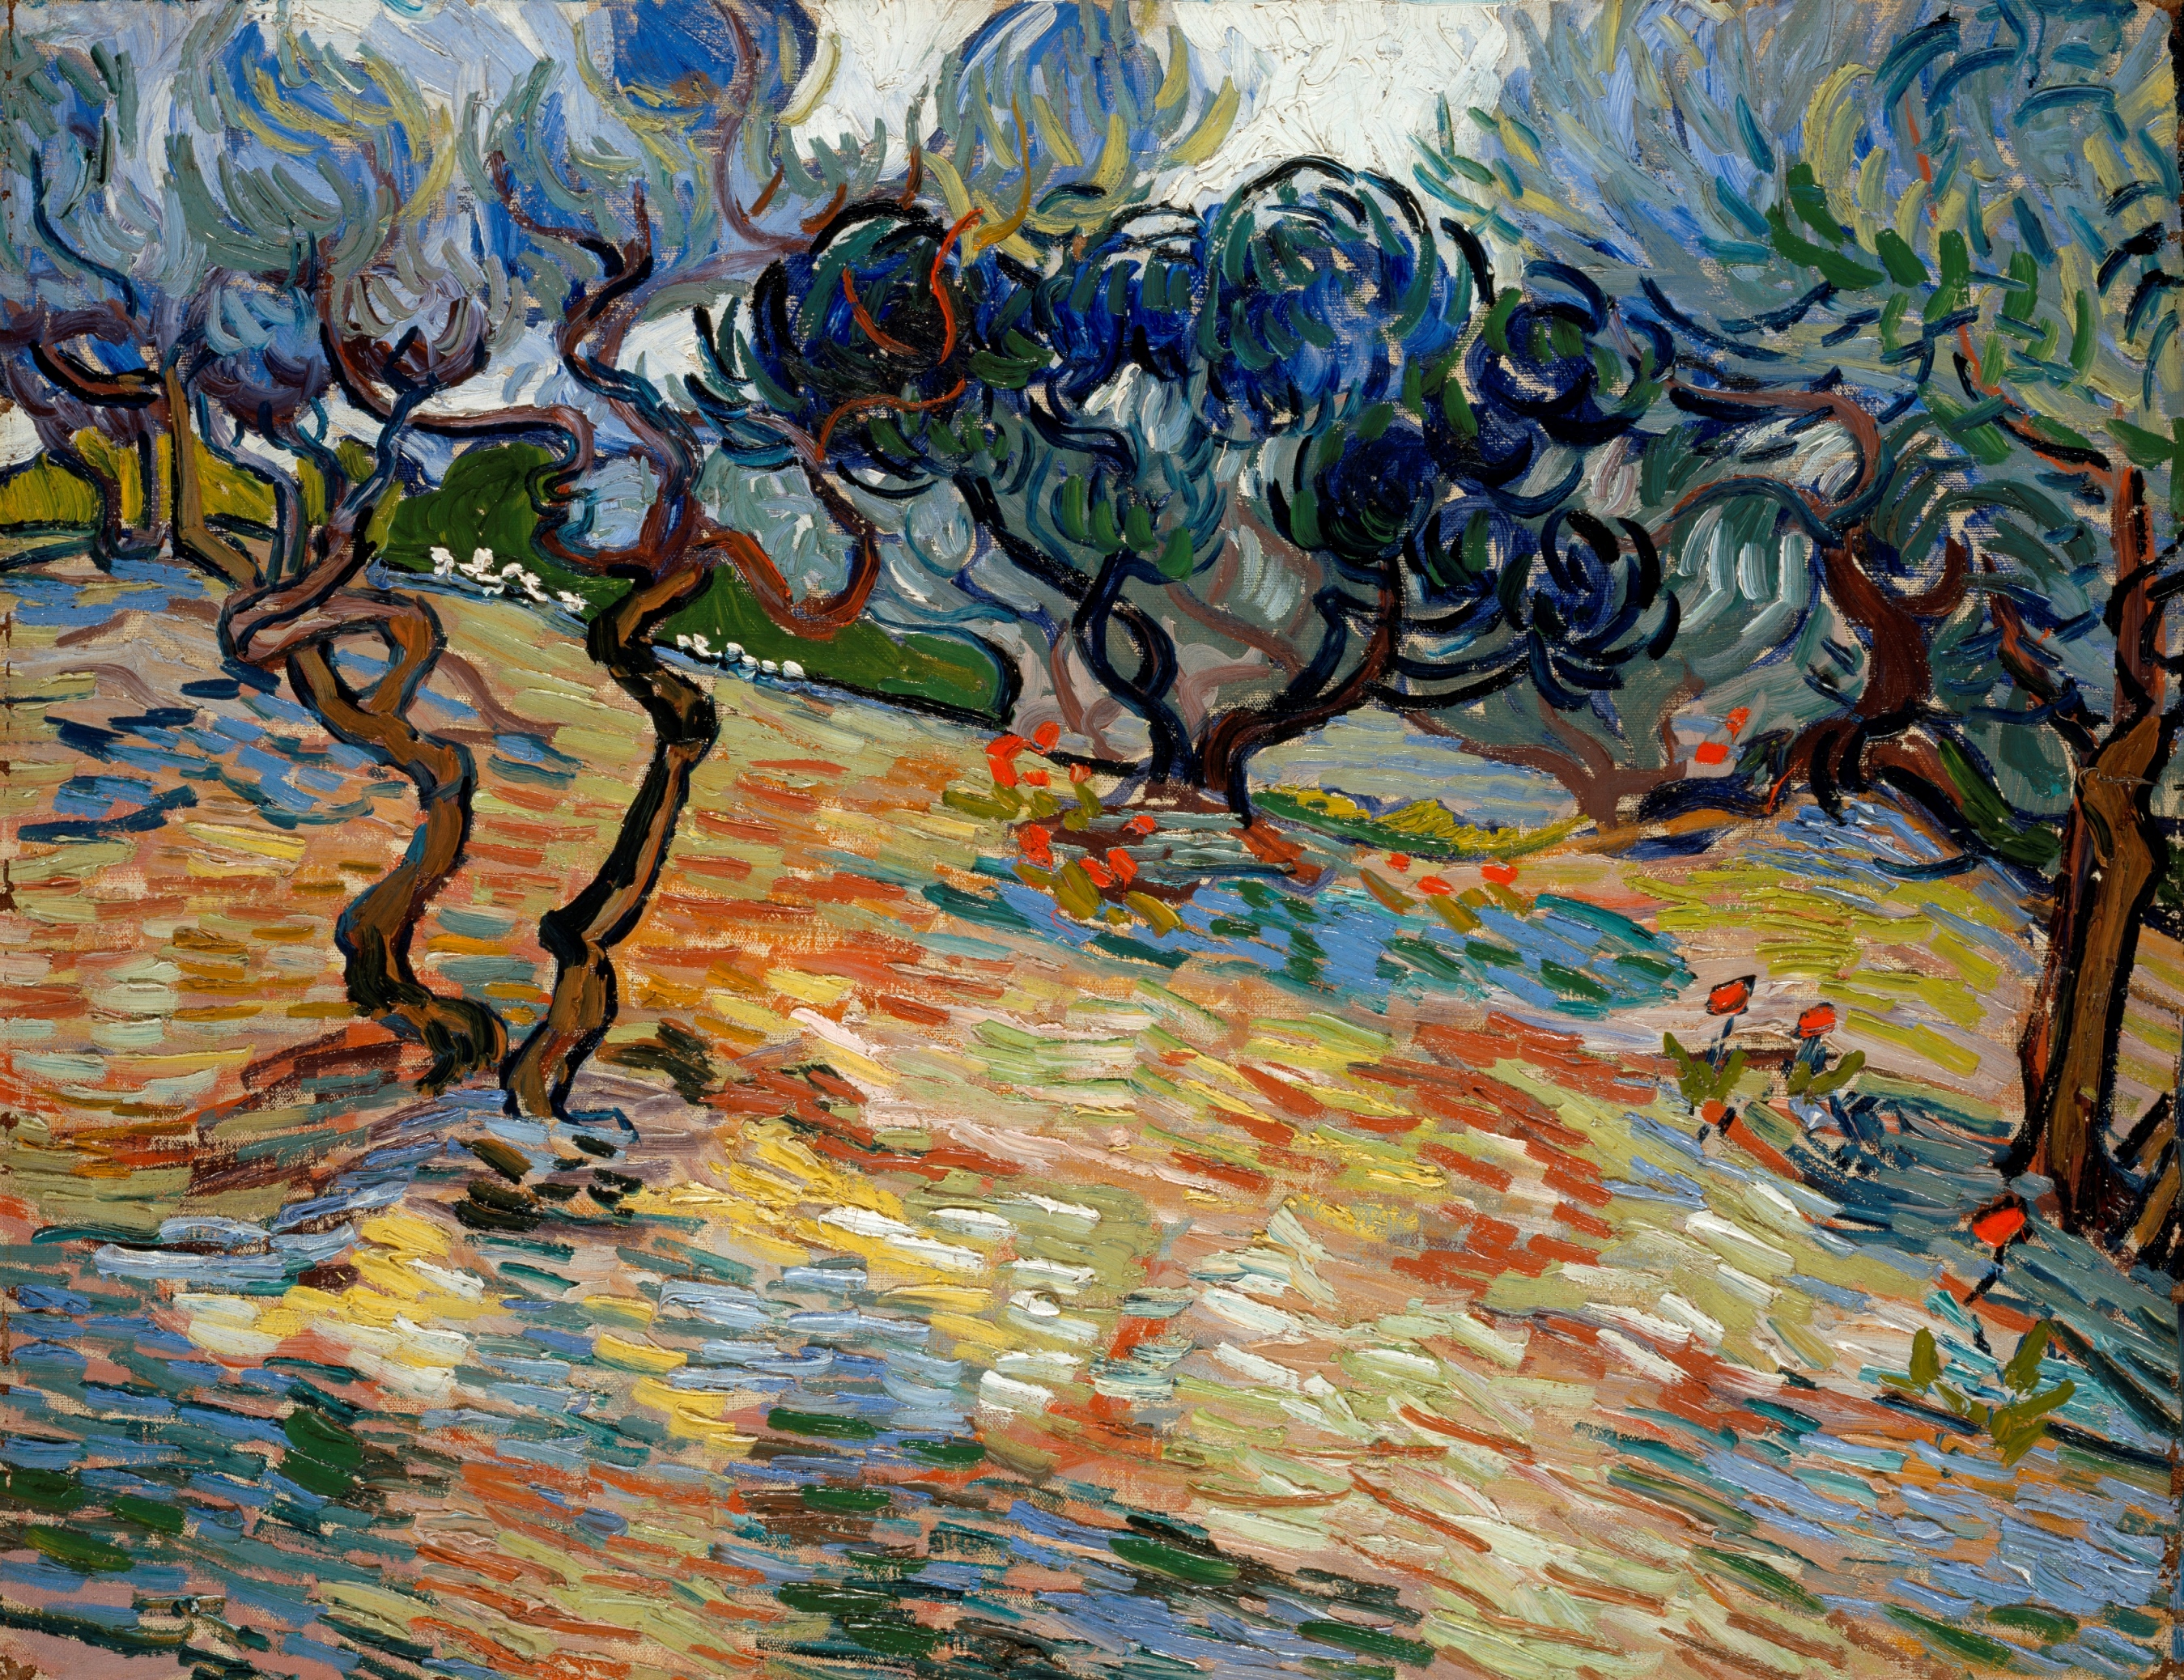 Champs d’oliviers by Vincent van Gogh - 1889 